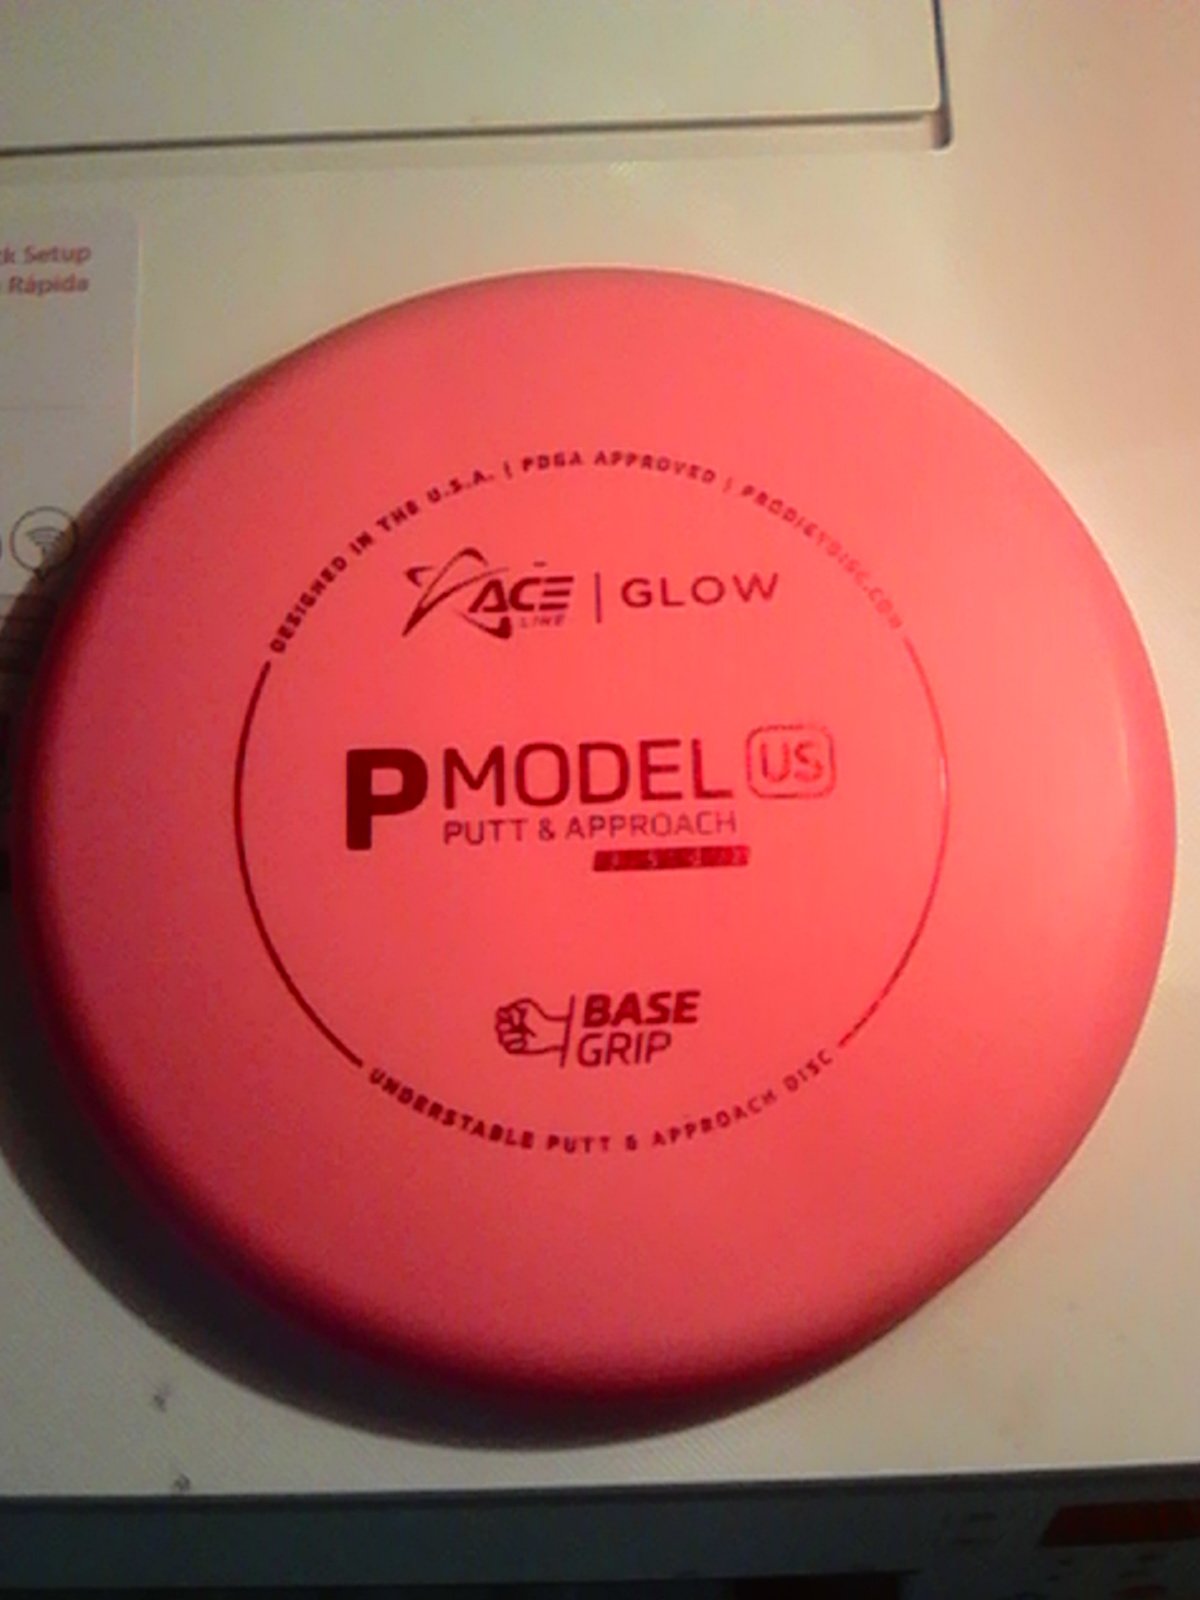 Prodigy Ace Line Base Grip Glow P Model US 175 Grams (GP3)